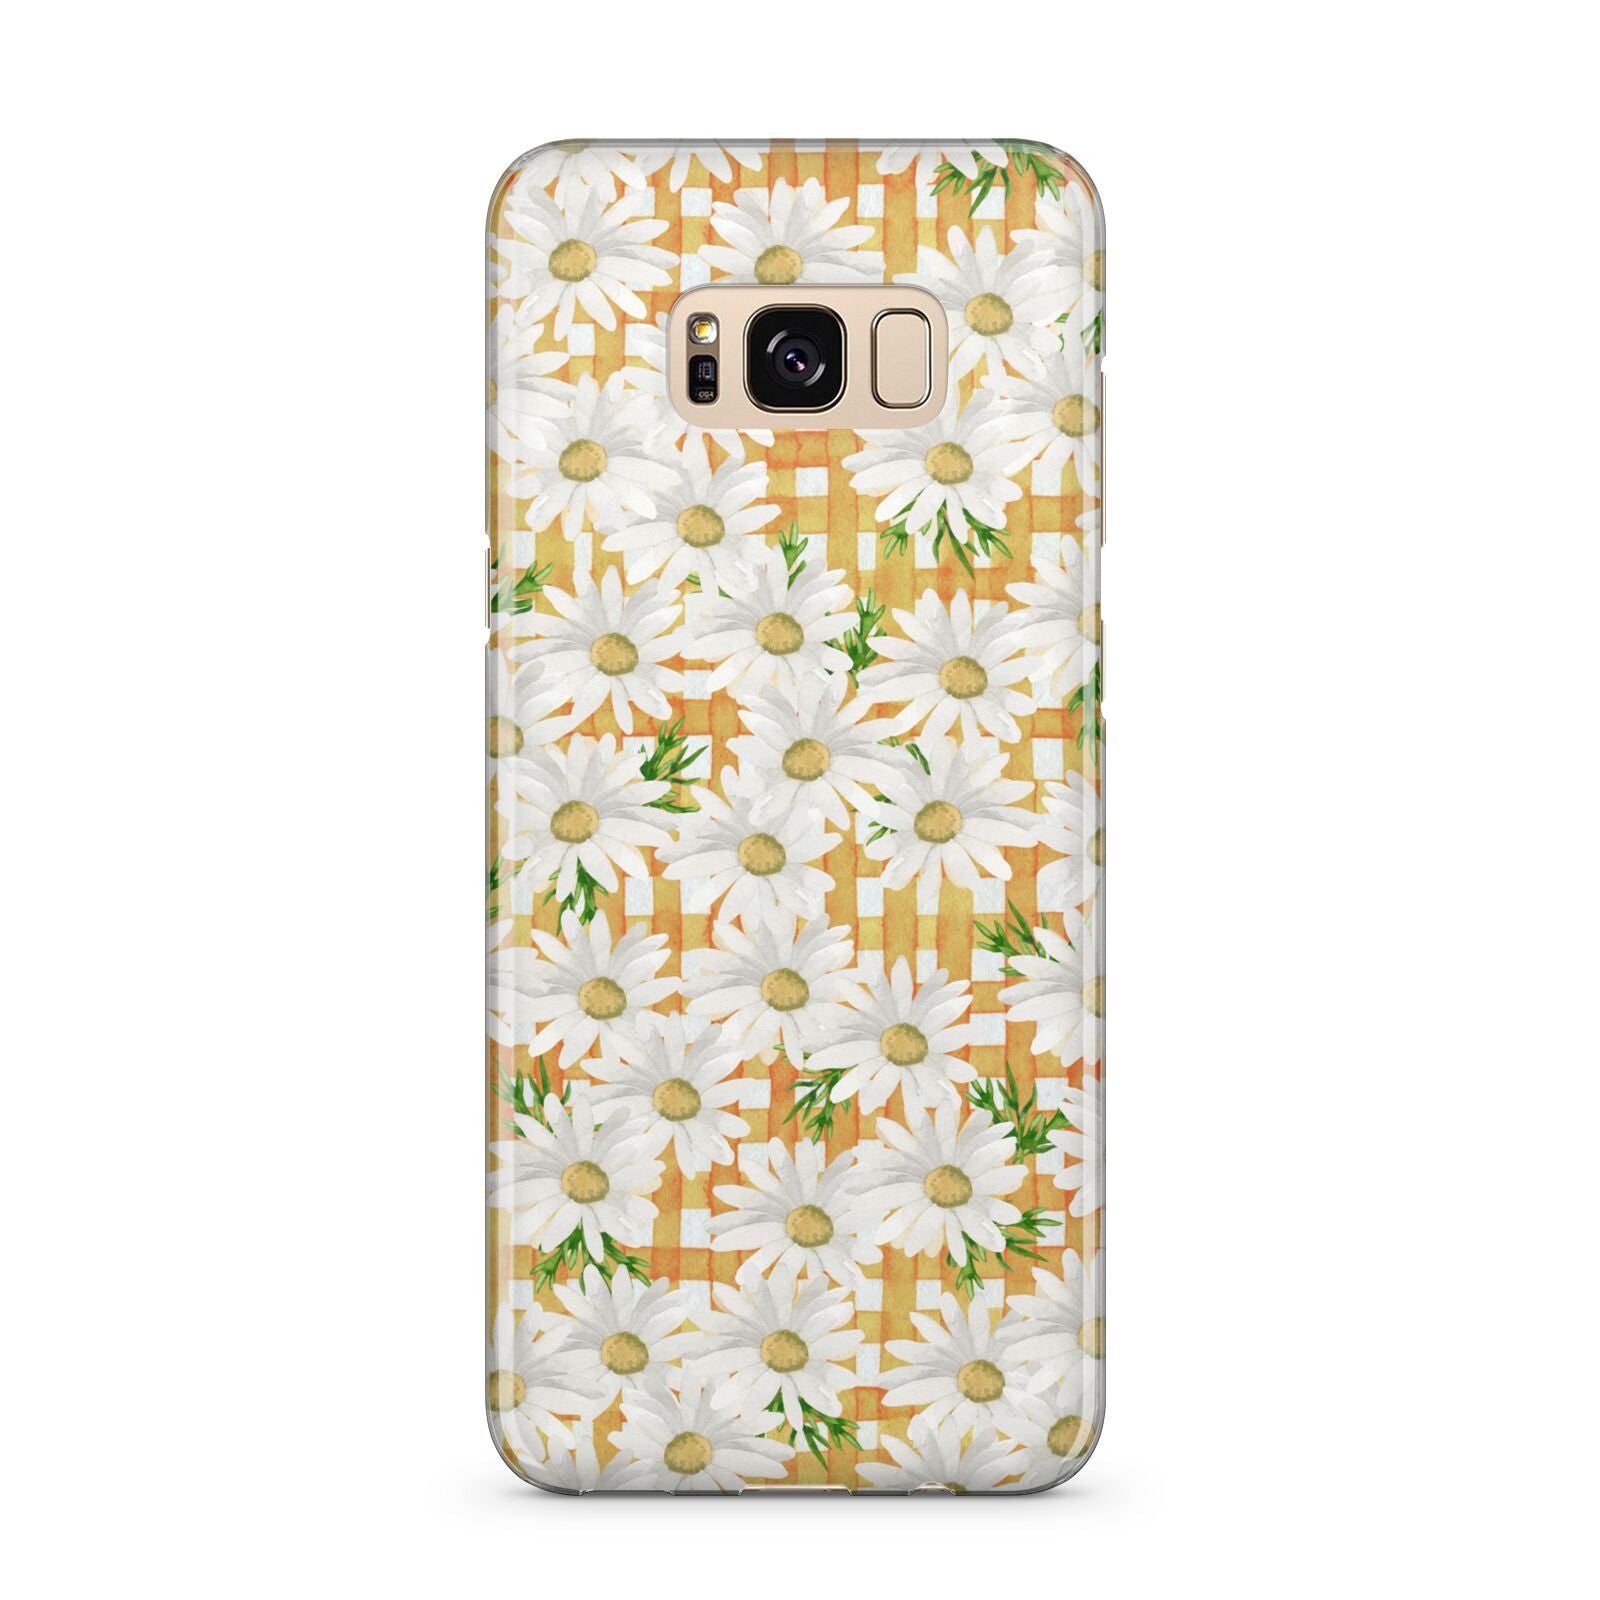 Checkered Daisy Samsung Galaxy S8 Plus Case